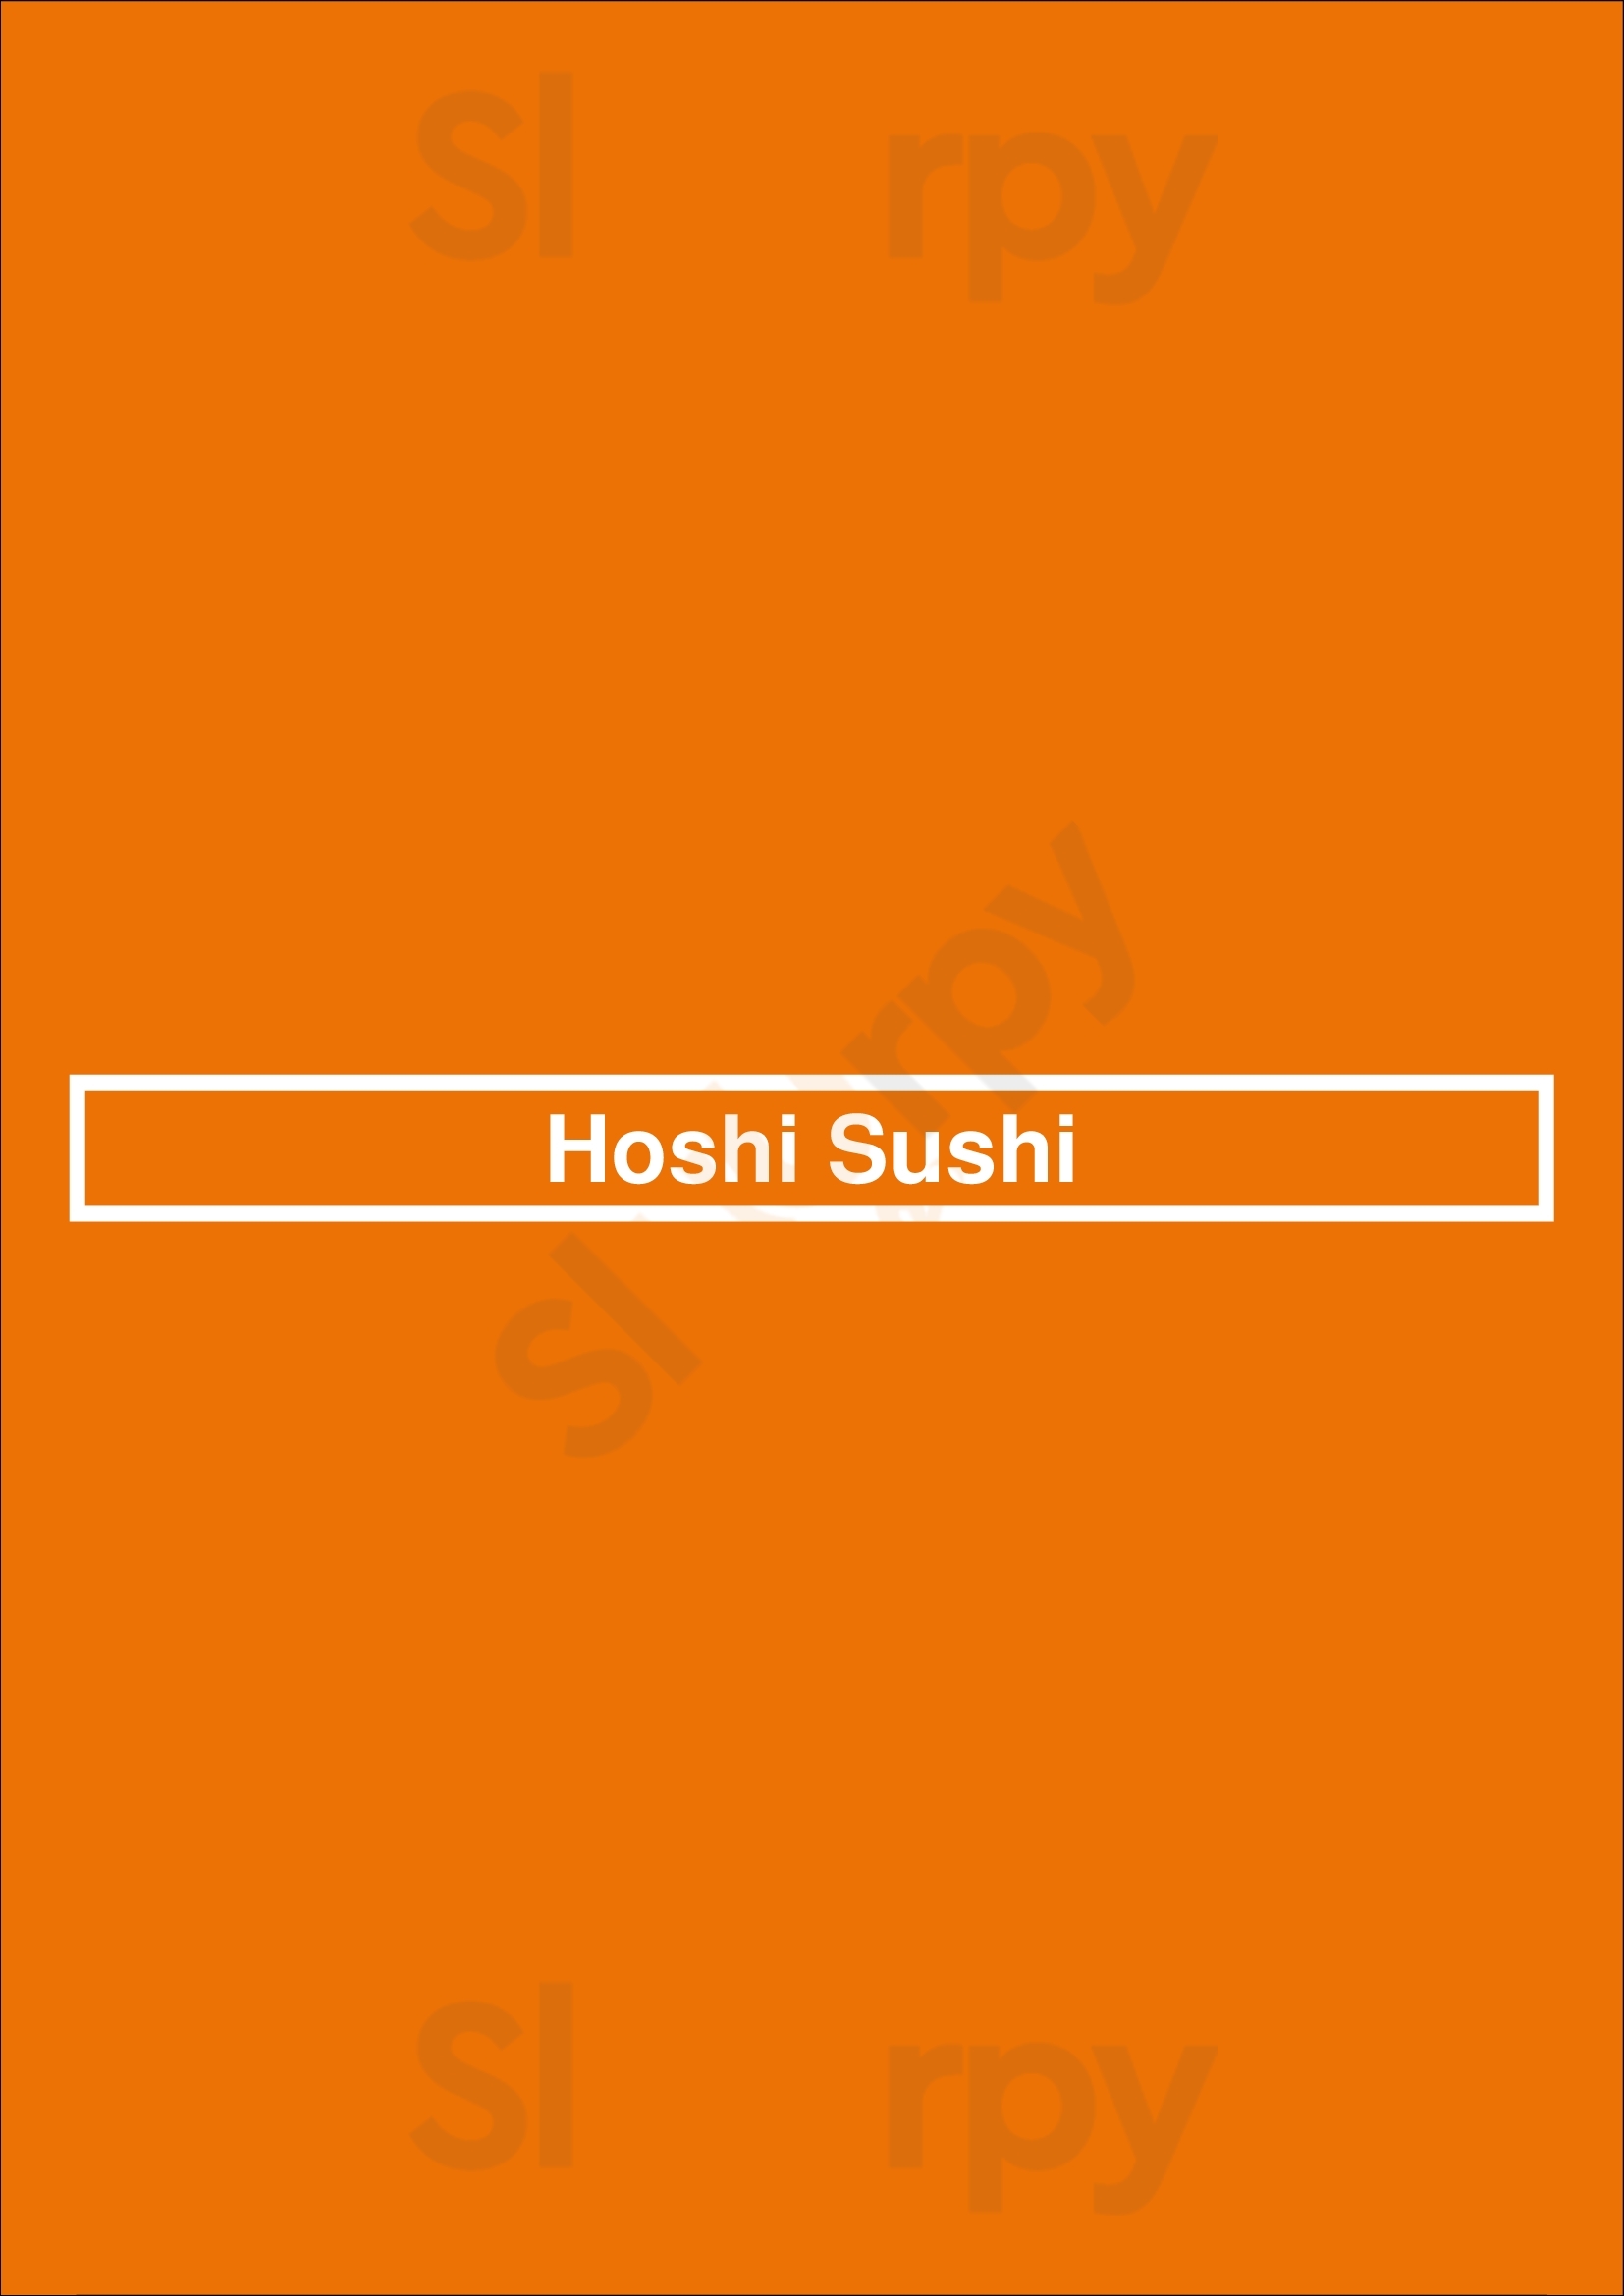 Hoshi Sushi Buenos Aires Menu - 1